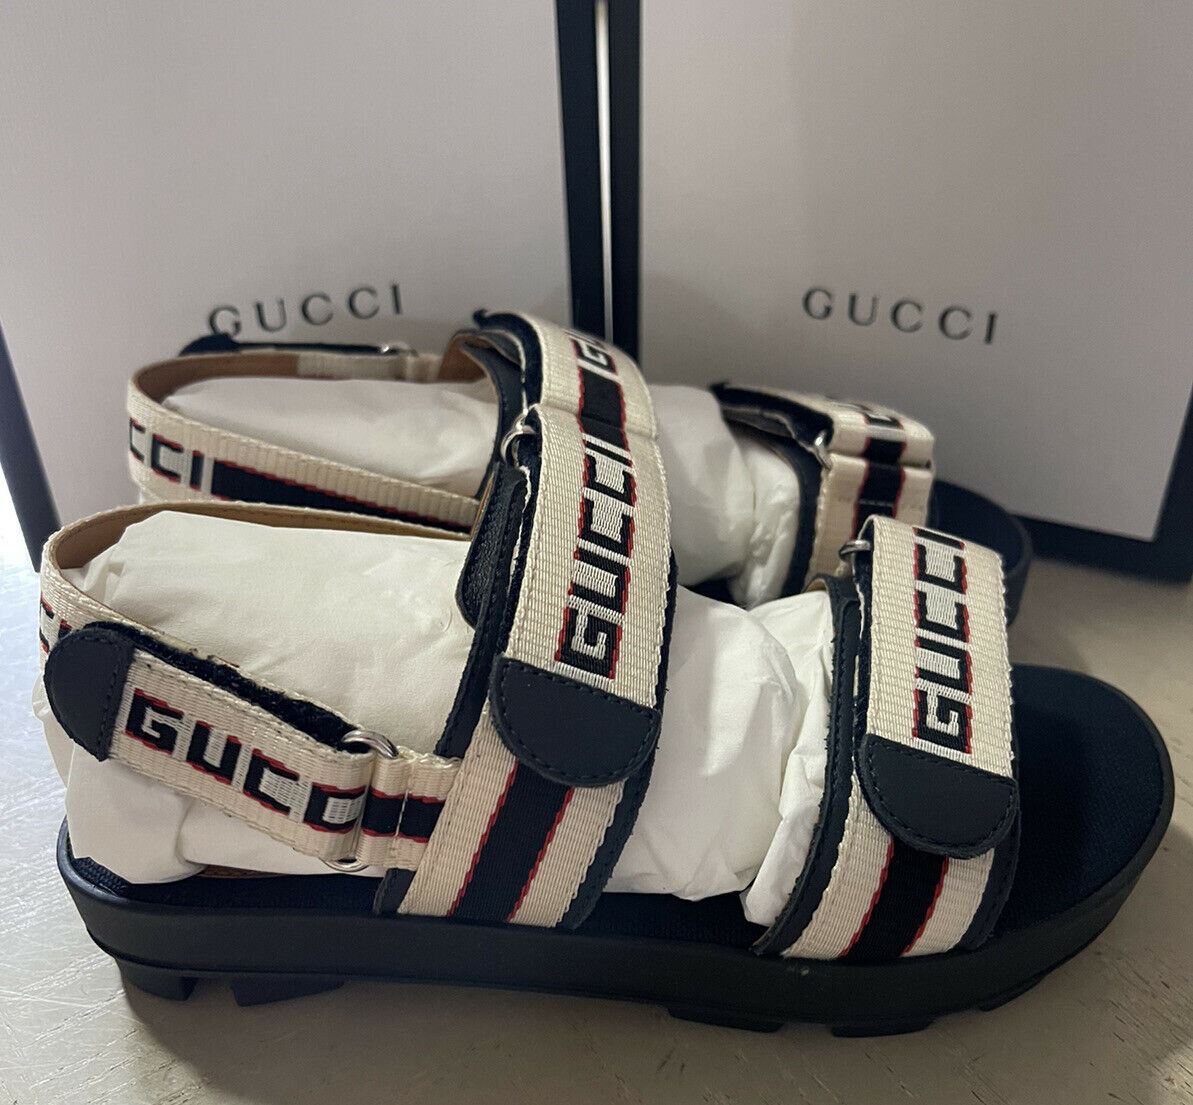 NIB Gucci Kids Canvas/Leather Sandal Shoes Black/White Size 31/13US Age 6.5